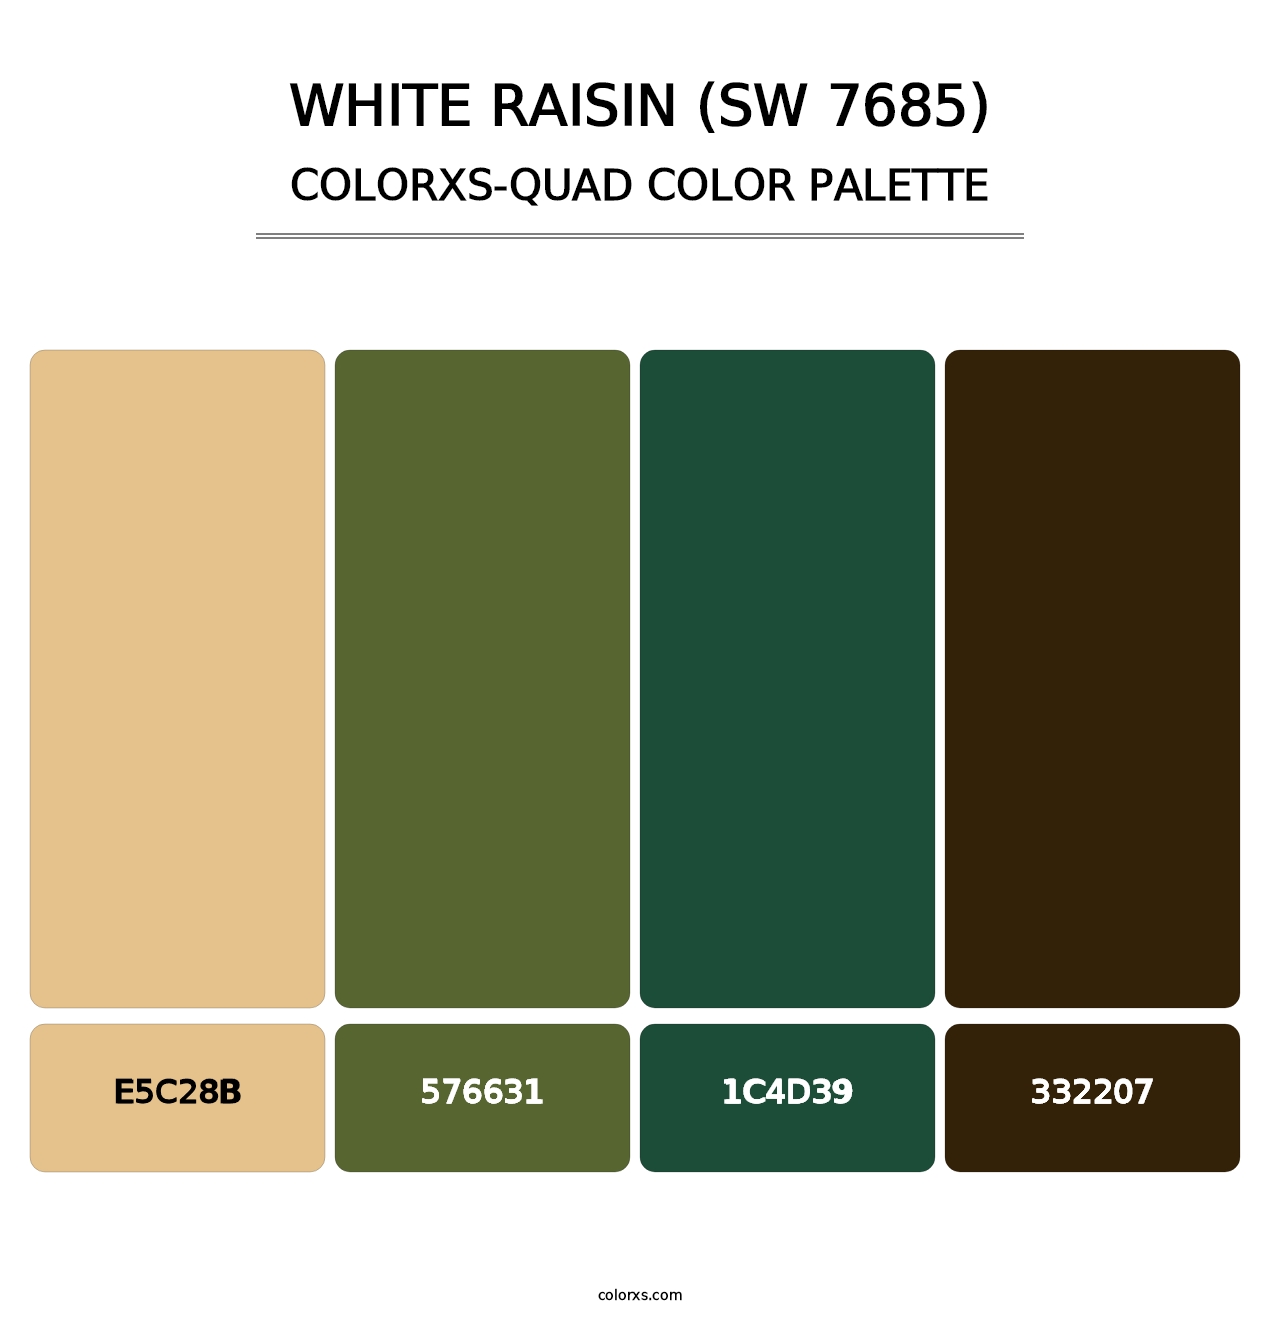 White Raisin (SW 7685) - Colorxs Quad Palette